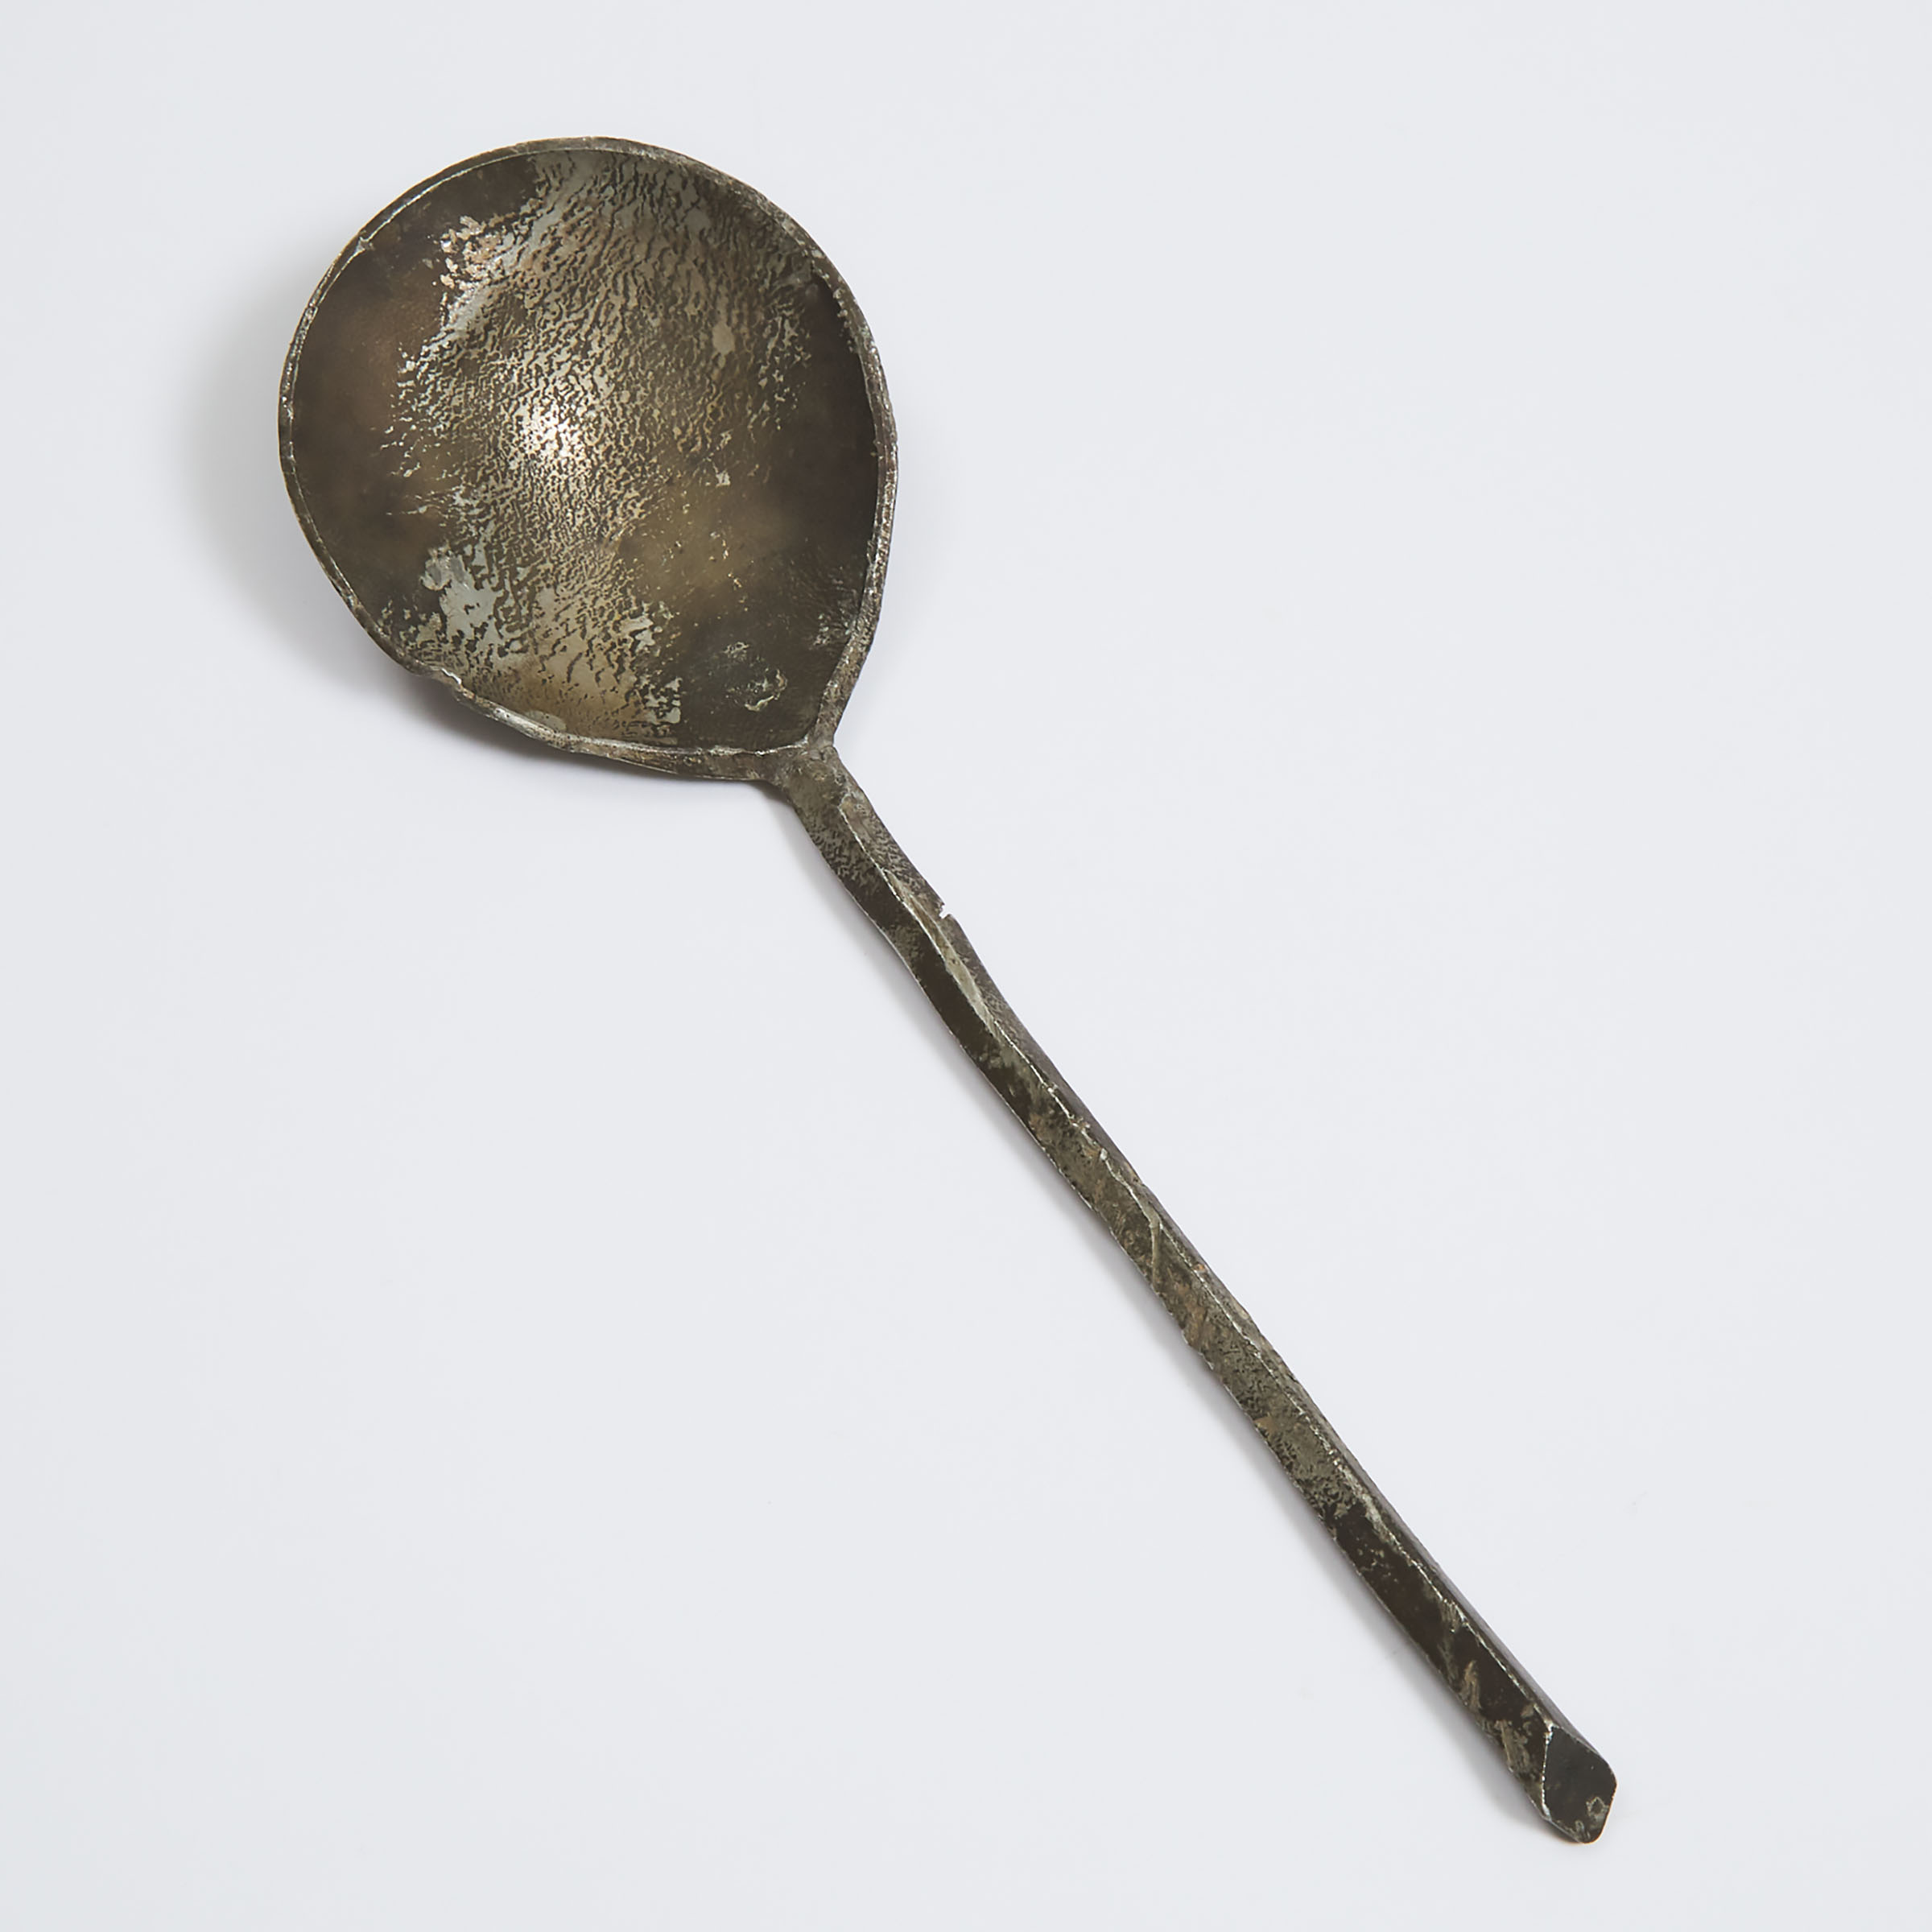 English Pewter Slip Top Spoon, 17th century